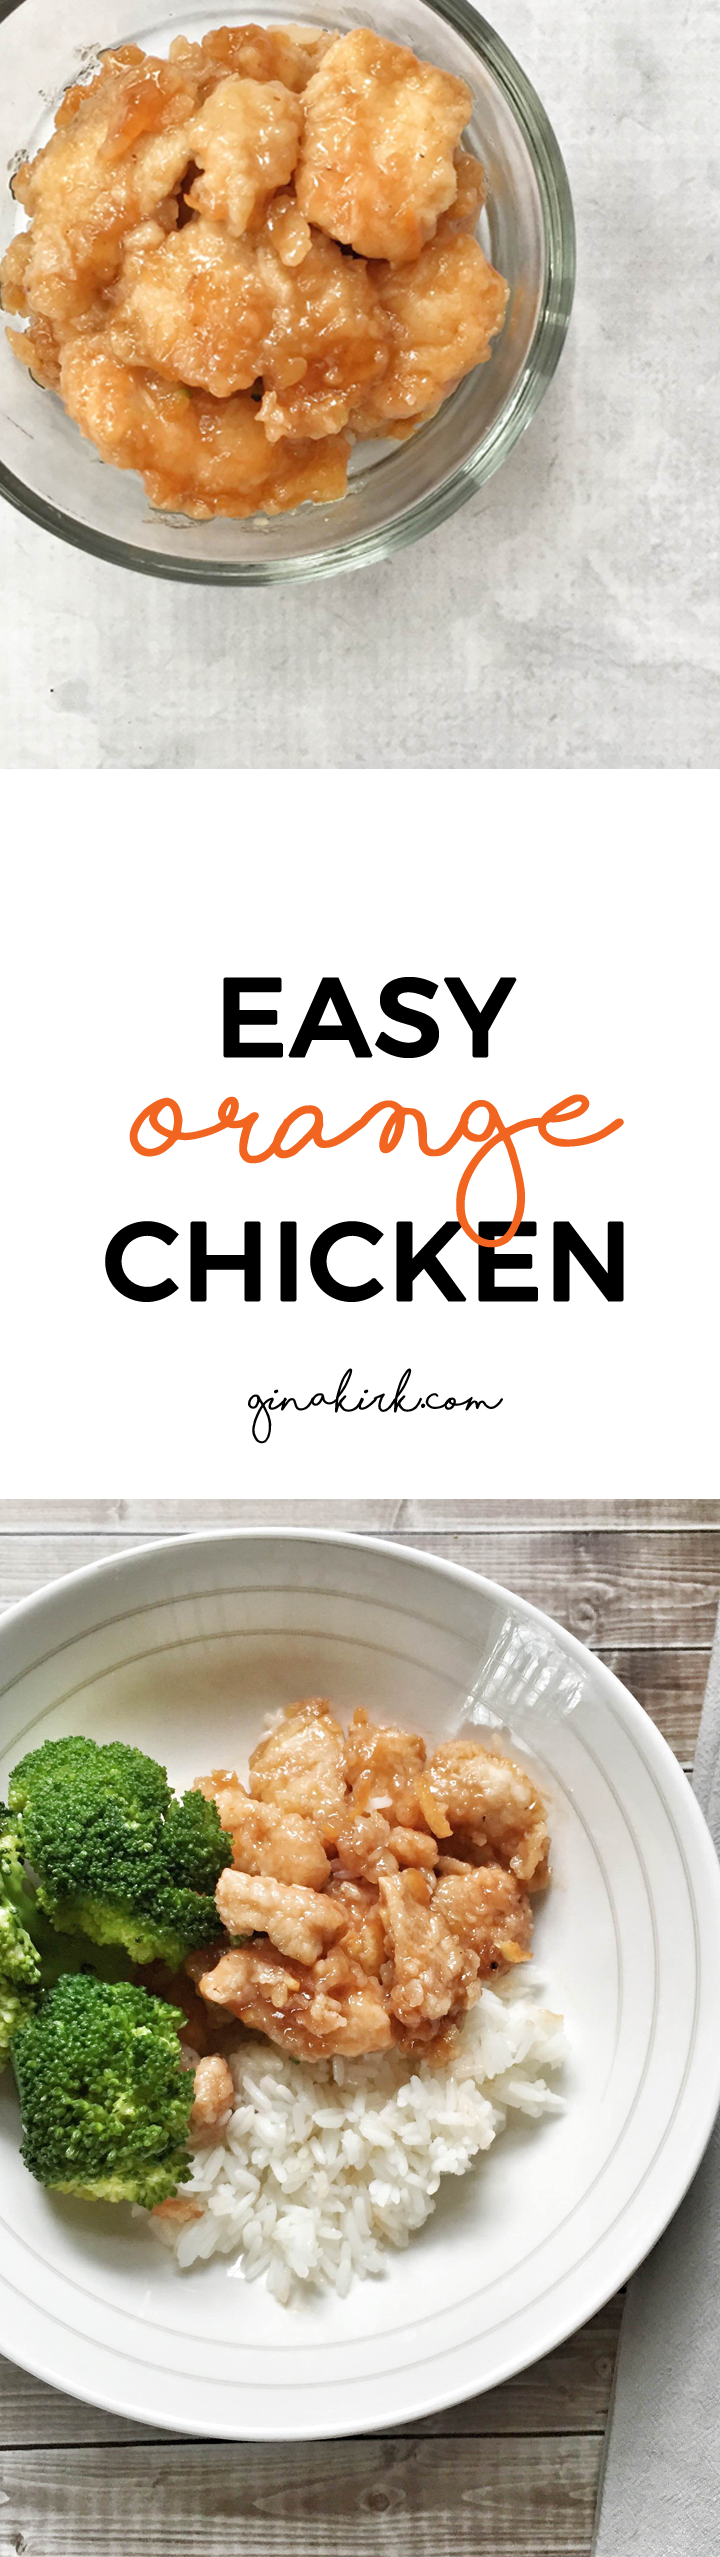 Easy Orange Chicken Recipe GinaKirk.com @ginaekirk